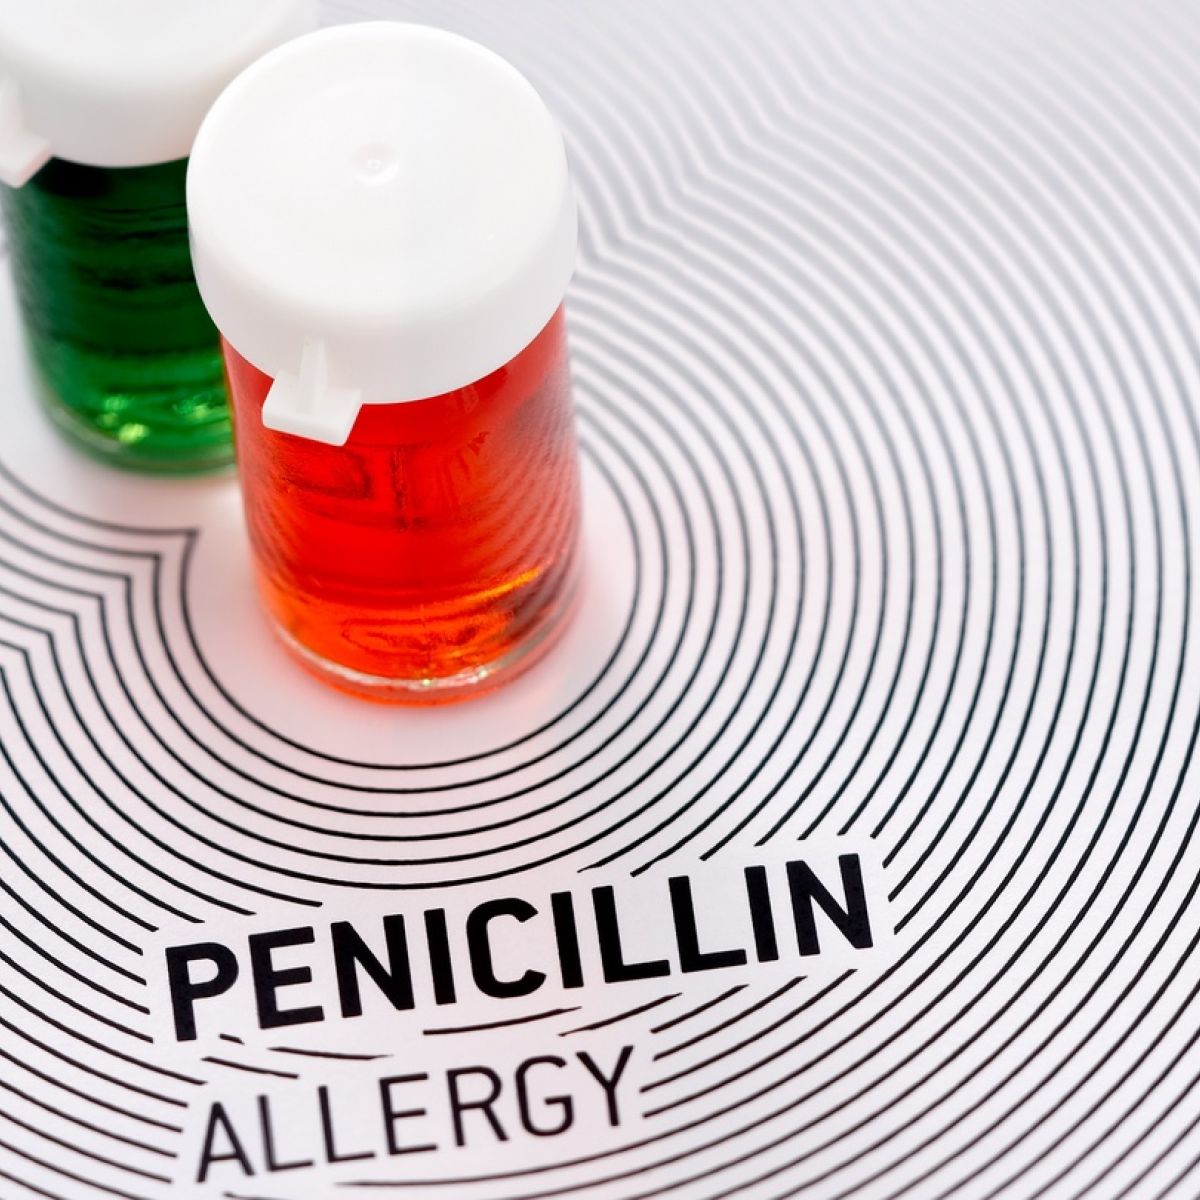 Allergy penicillin Penicillin Allergy: